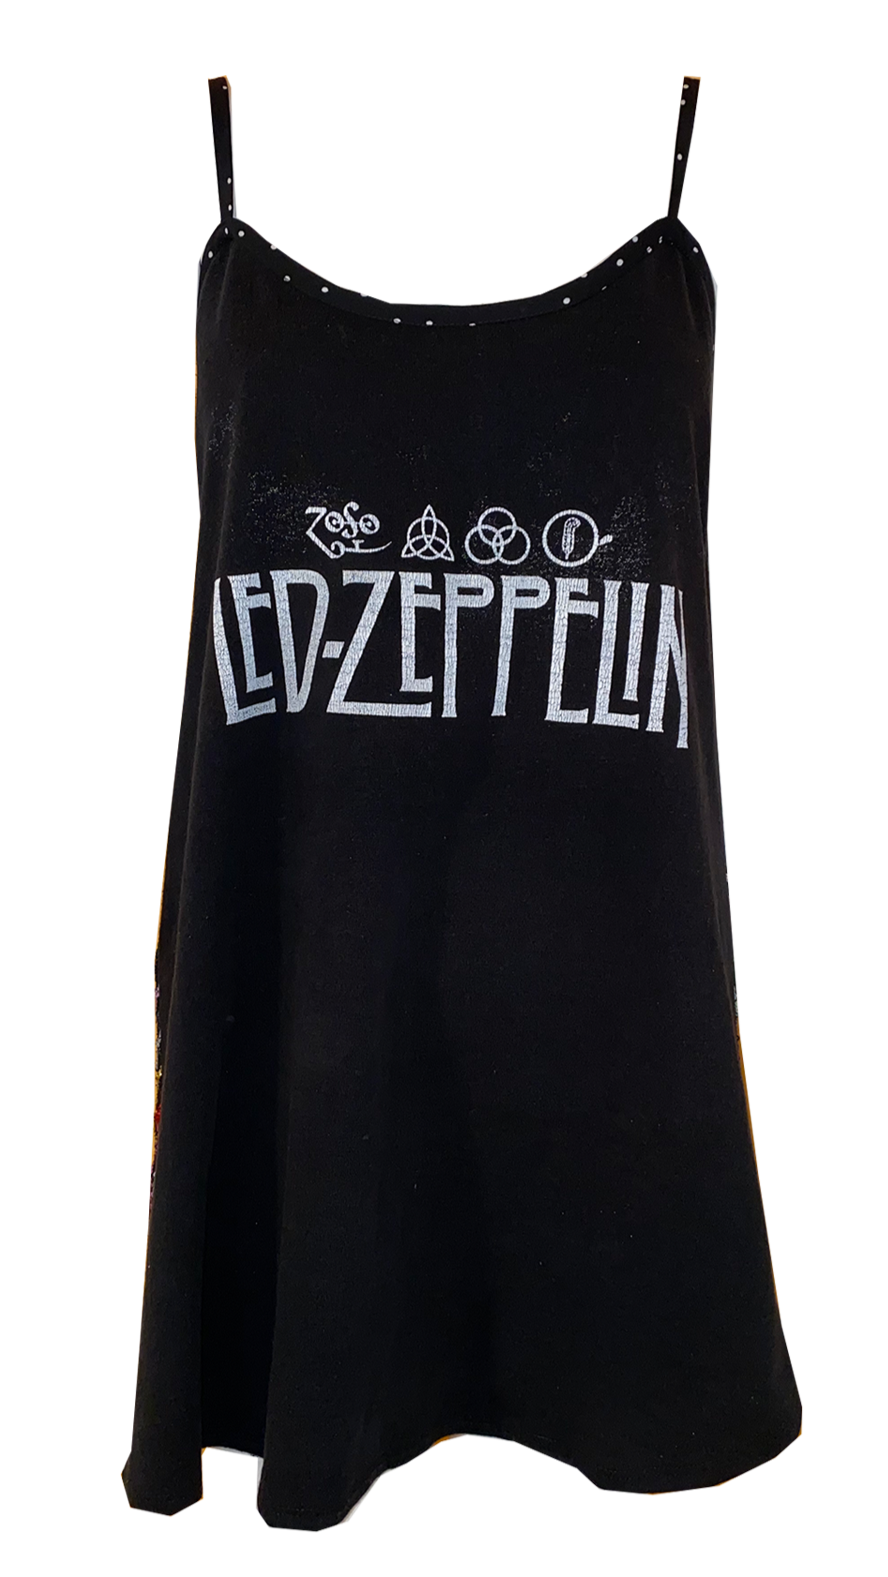 Led Zeppelin “Lola”